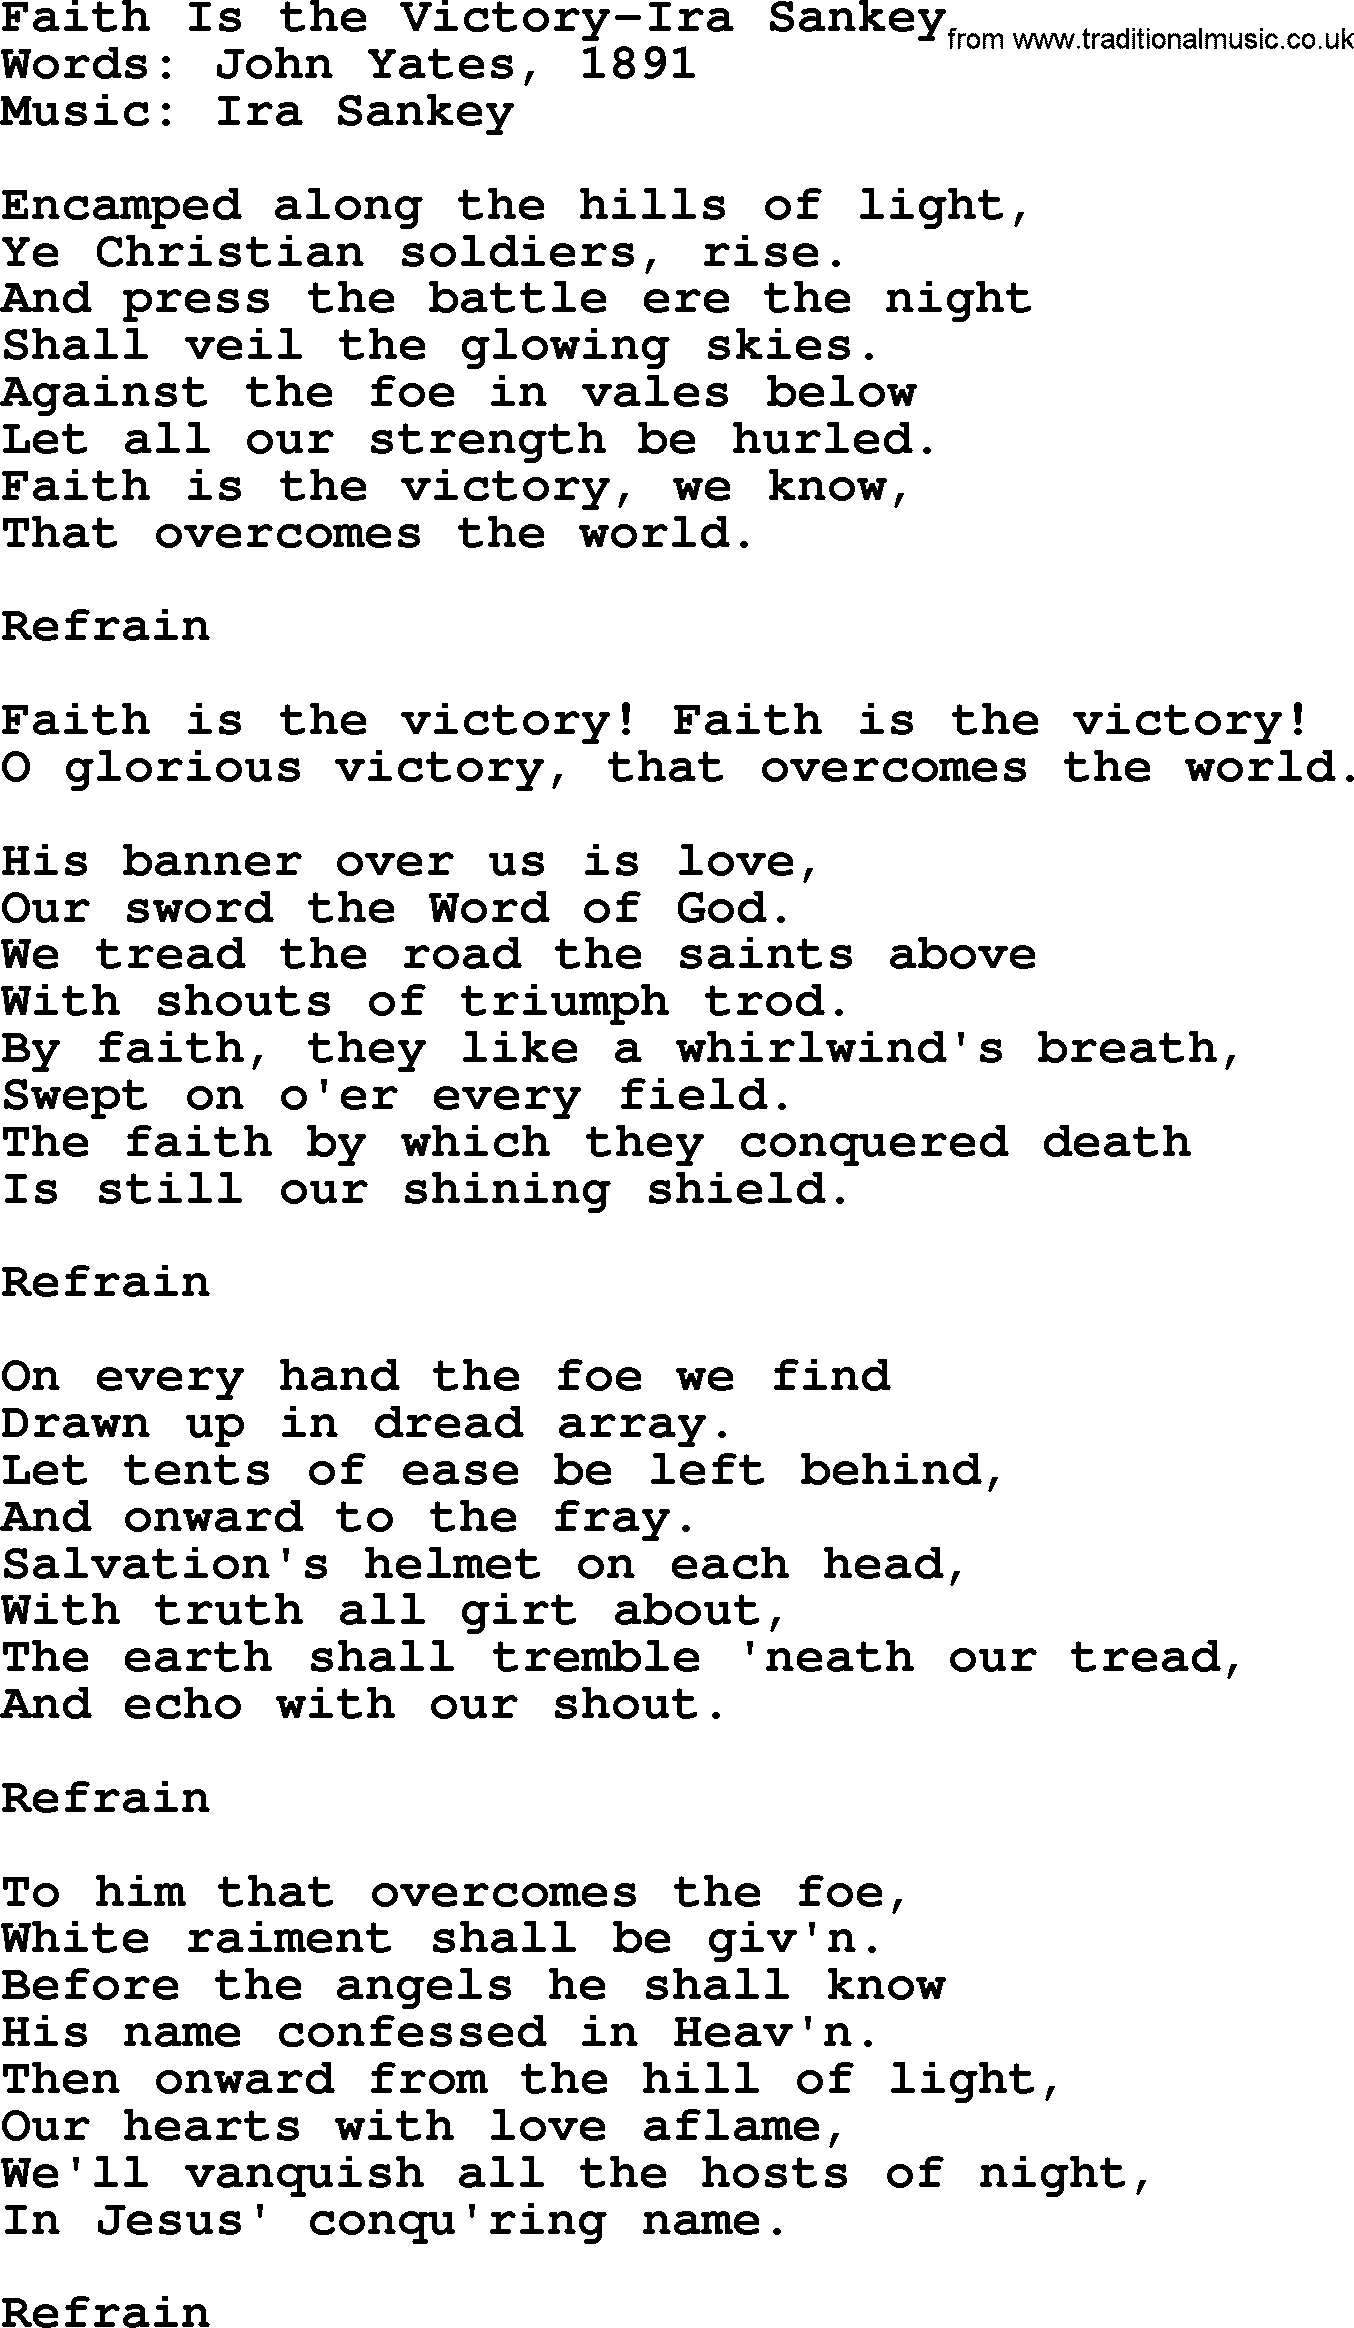 Ira Sankey hymn: Faith Is the Victory-Ira Sankey, lyrics